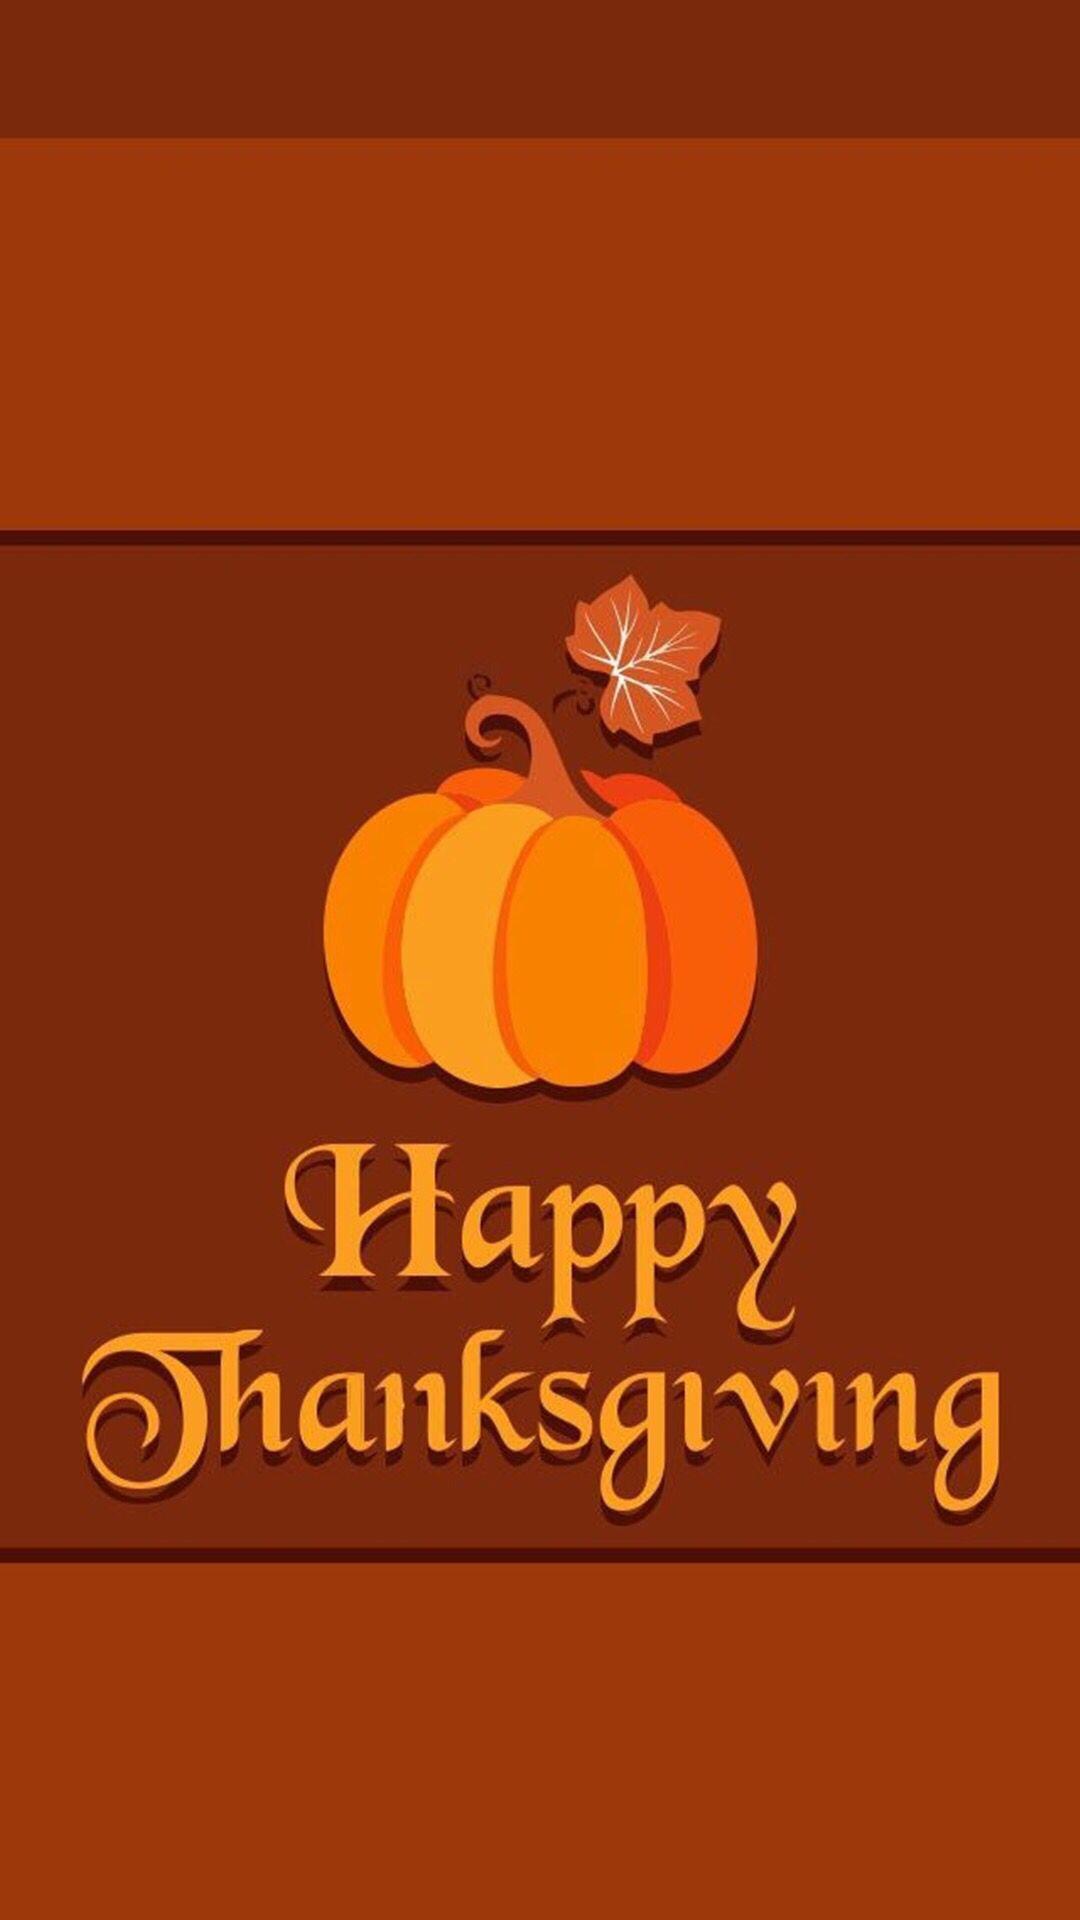 Thanksgiving Wallpaper. Give Thanks. Thanksgiving